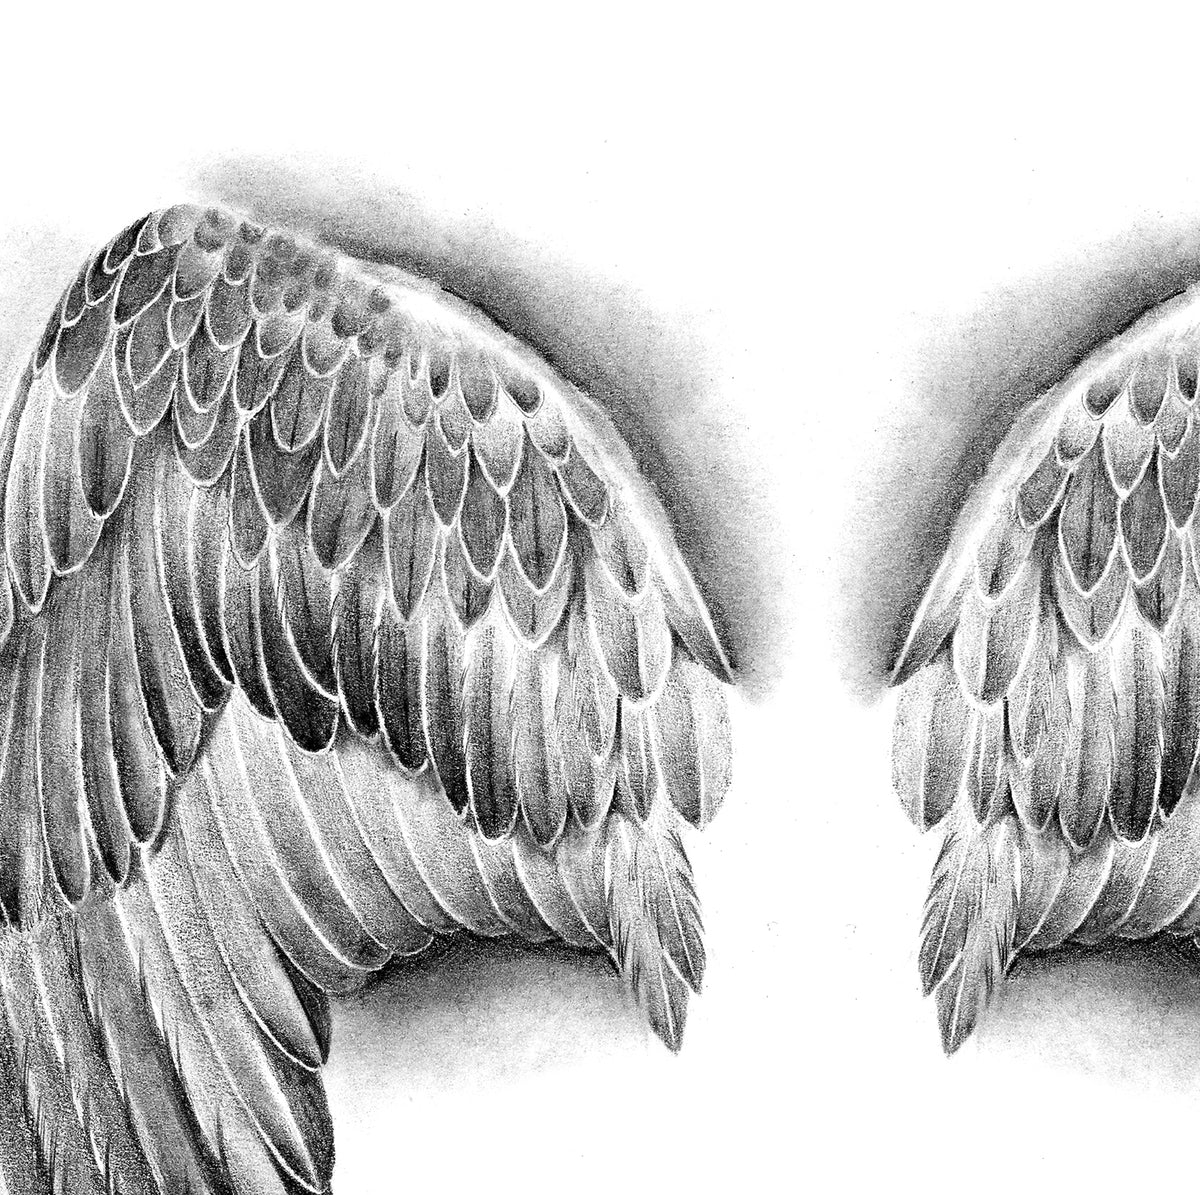 realistic angel wings tattoo